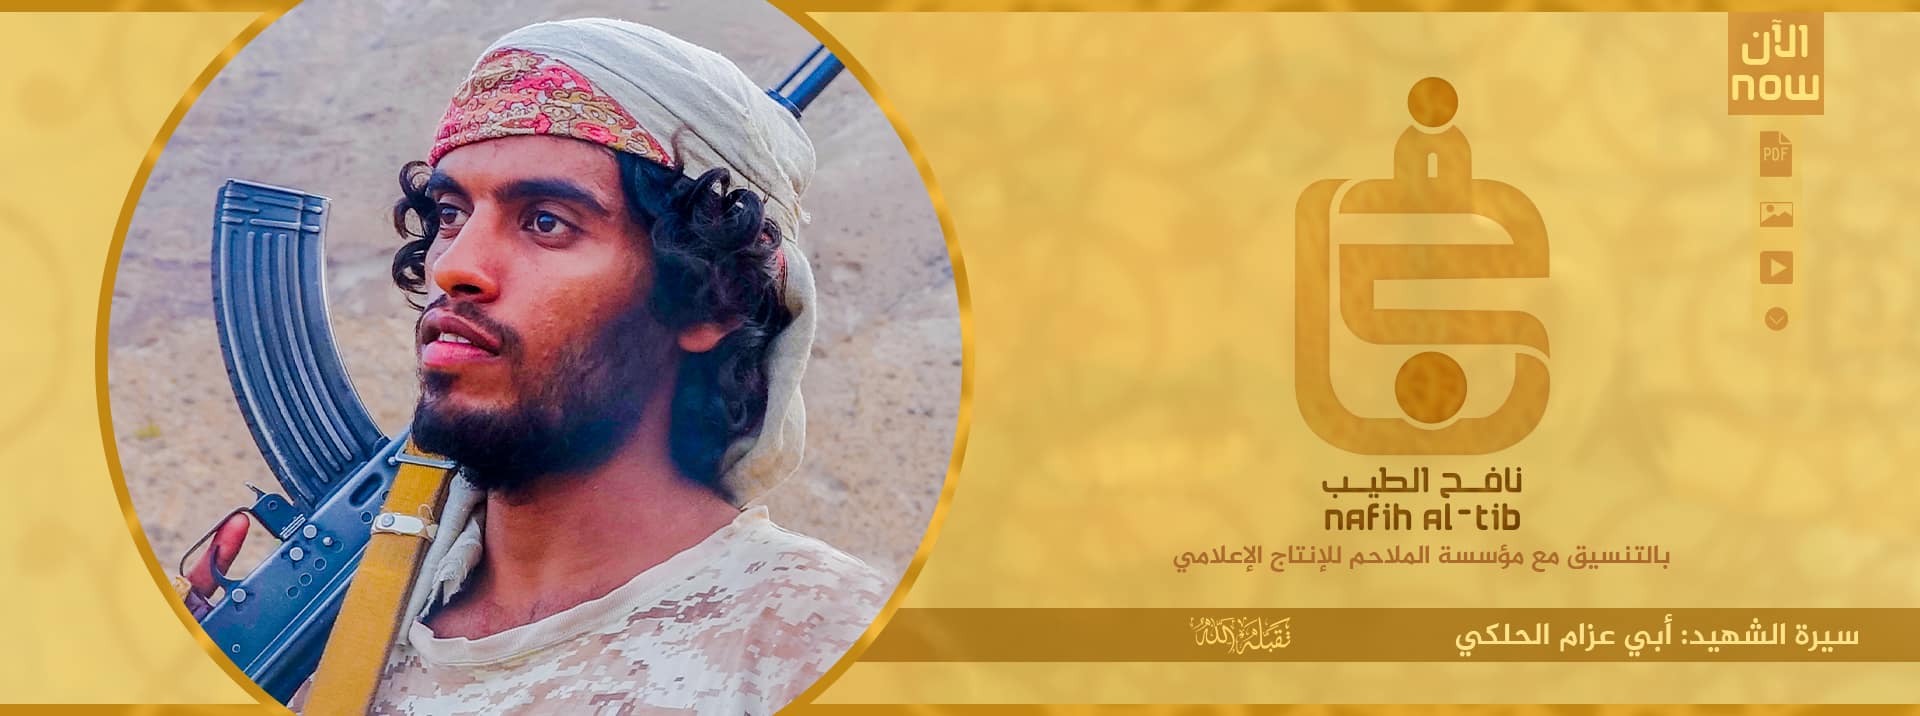 (Video) al-Malahem Media (al-Qaeda in the Arabian Peninsula / AQAP): Nafih al-Tib "The Biography of Martyr Abu Azzam al-Halki"- 19 February 2023